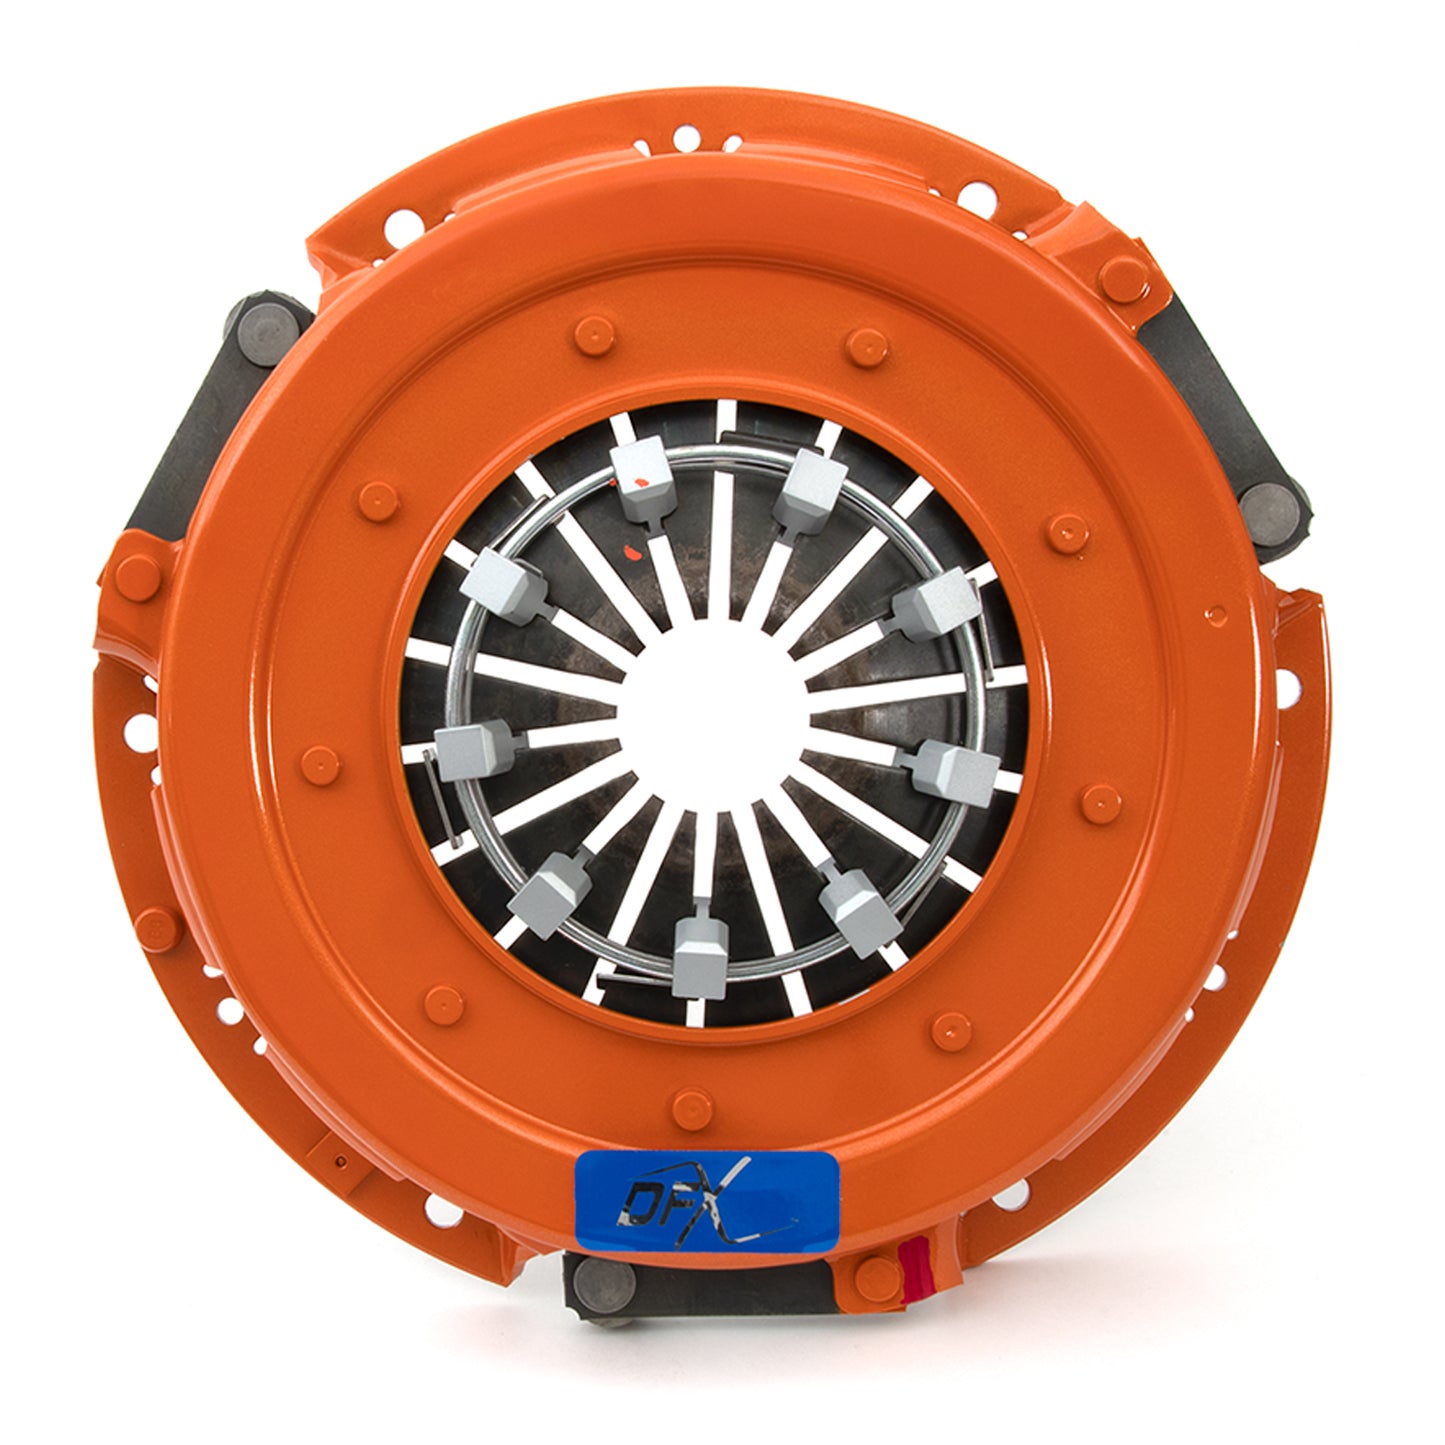 PN: 415114805 - DYAD XDS 10.4 Clutch and Flywheel Kit